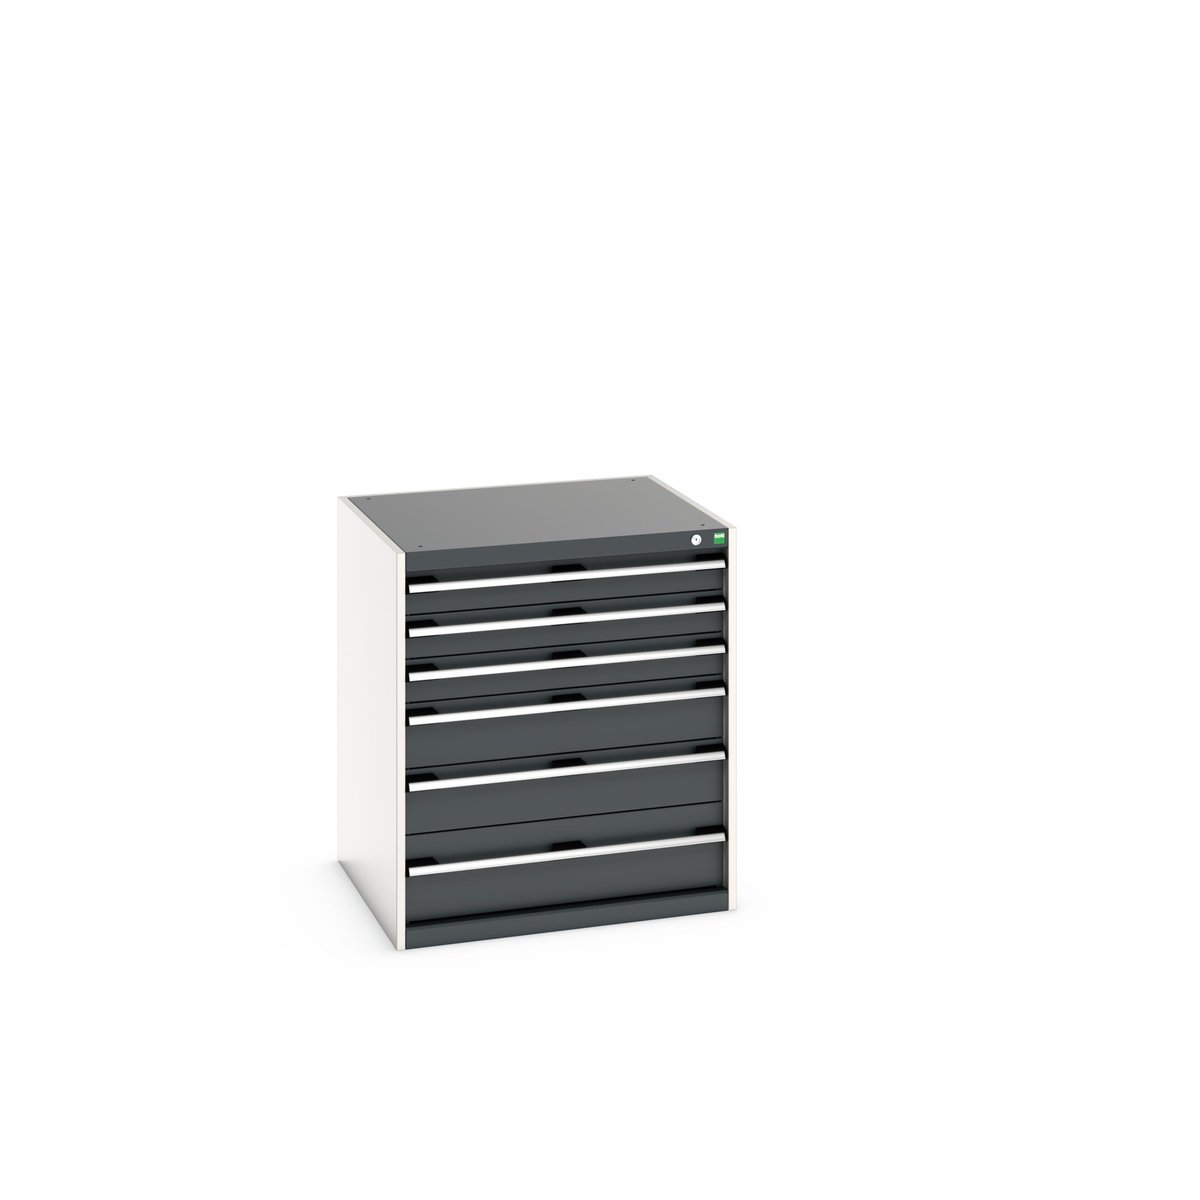 40028116. - cubio drawer cabinet